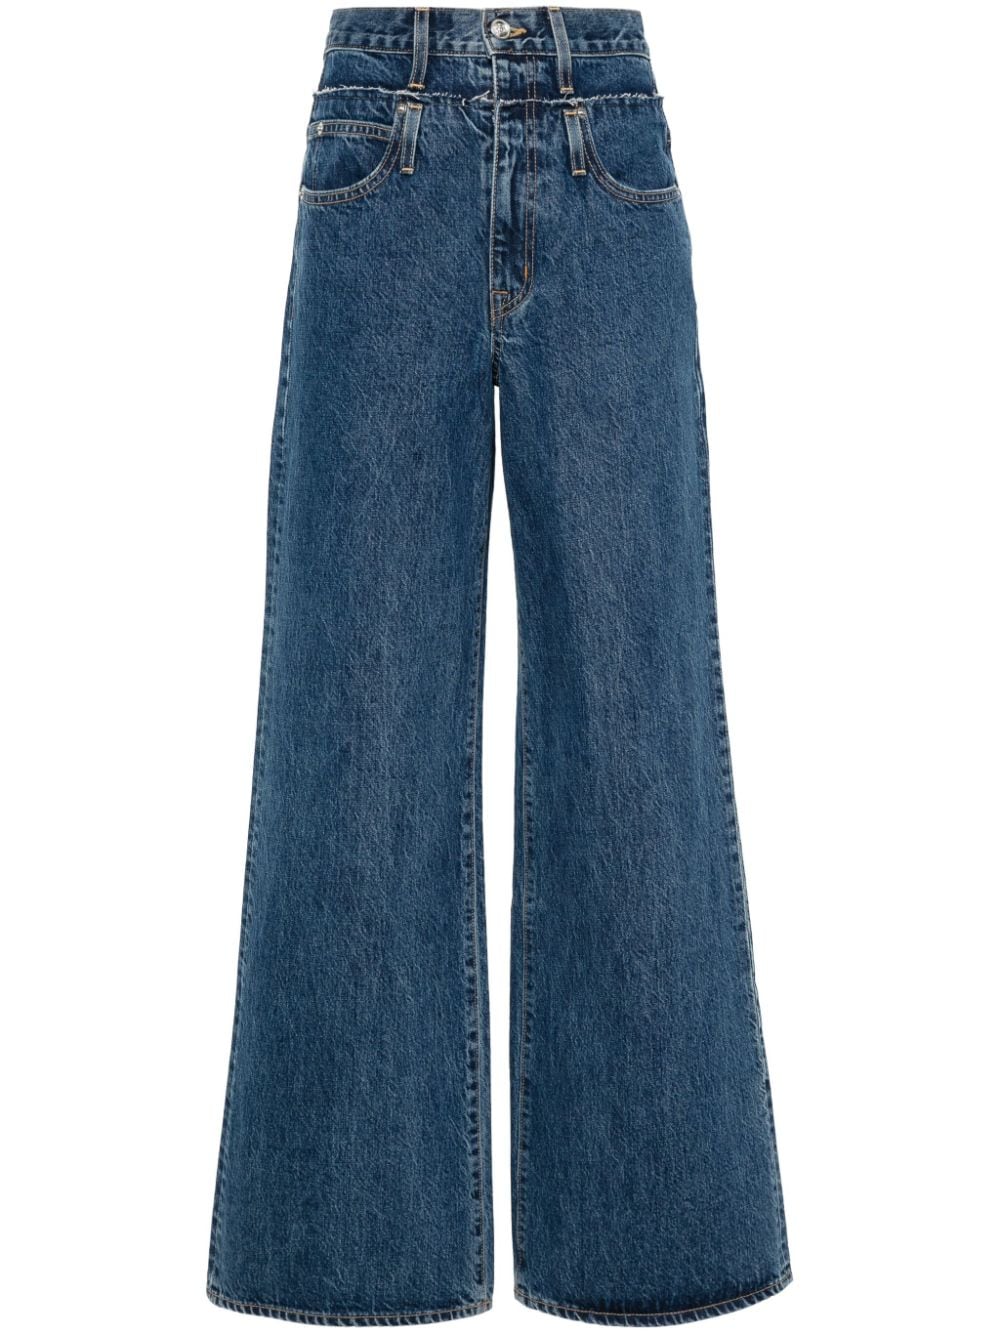 Re-Work Eva jeans